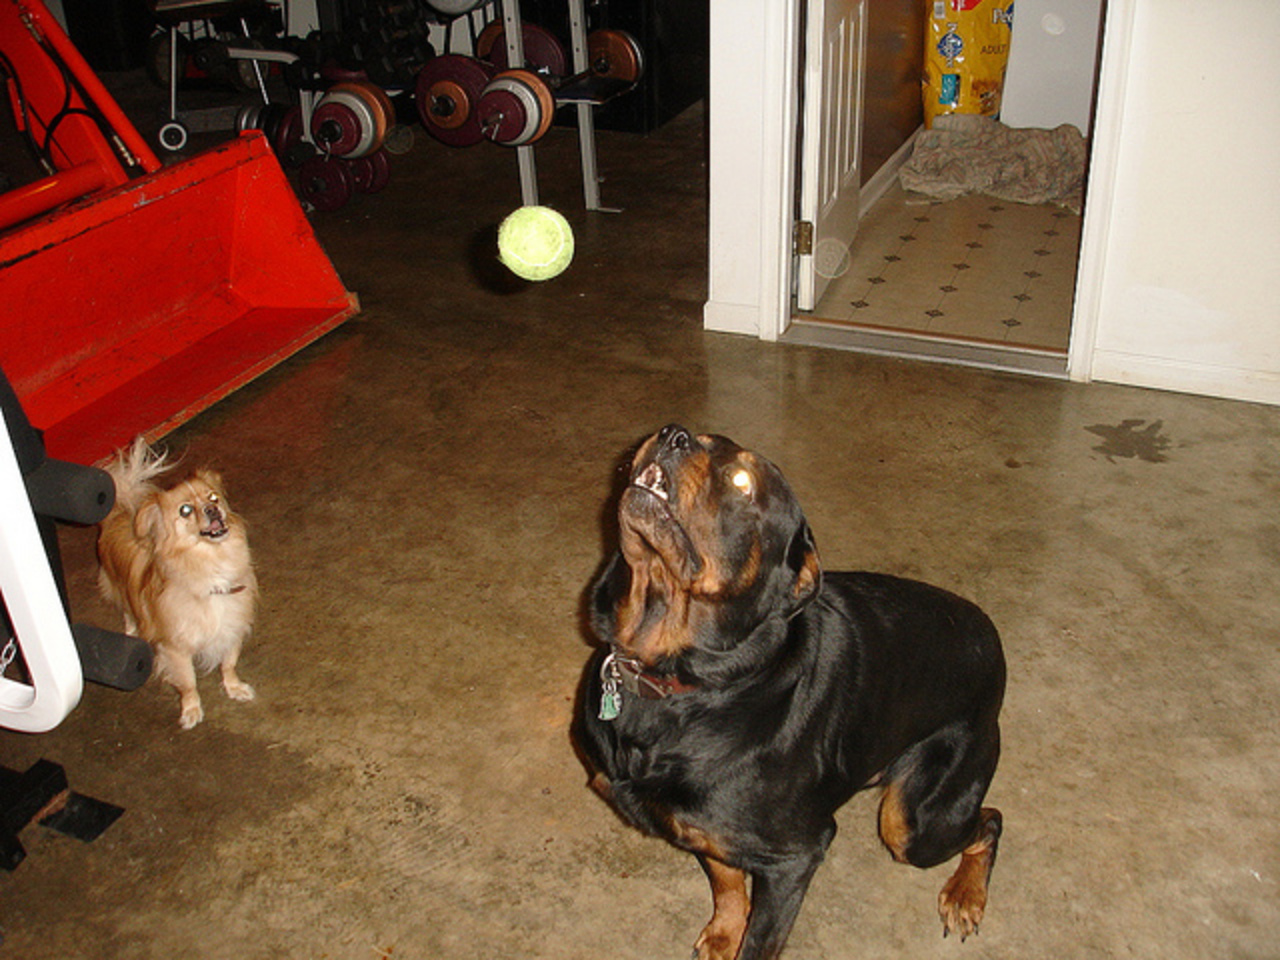 Kubota B3030 2005 and Rottweiler (3) | Flickr - Photo Sharing!